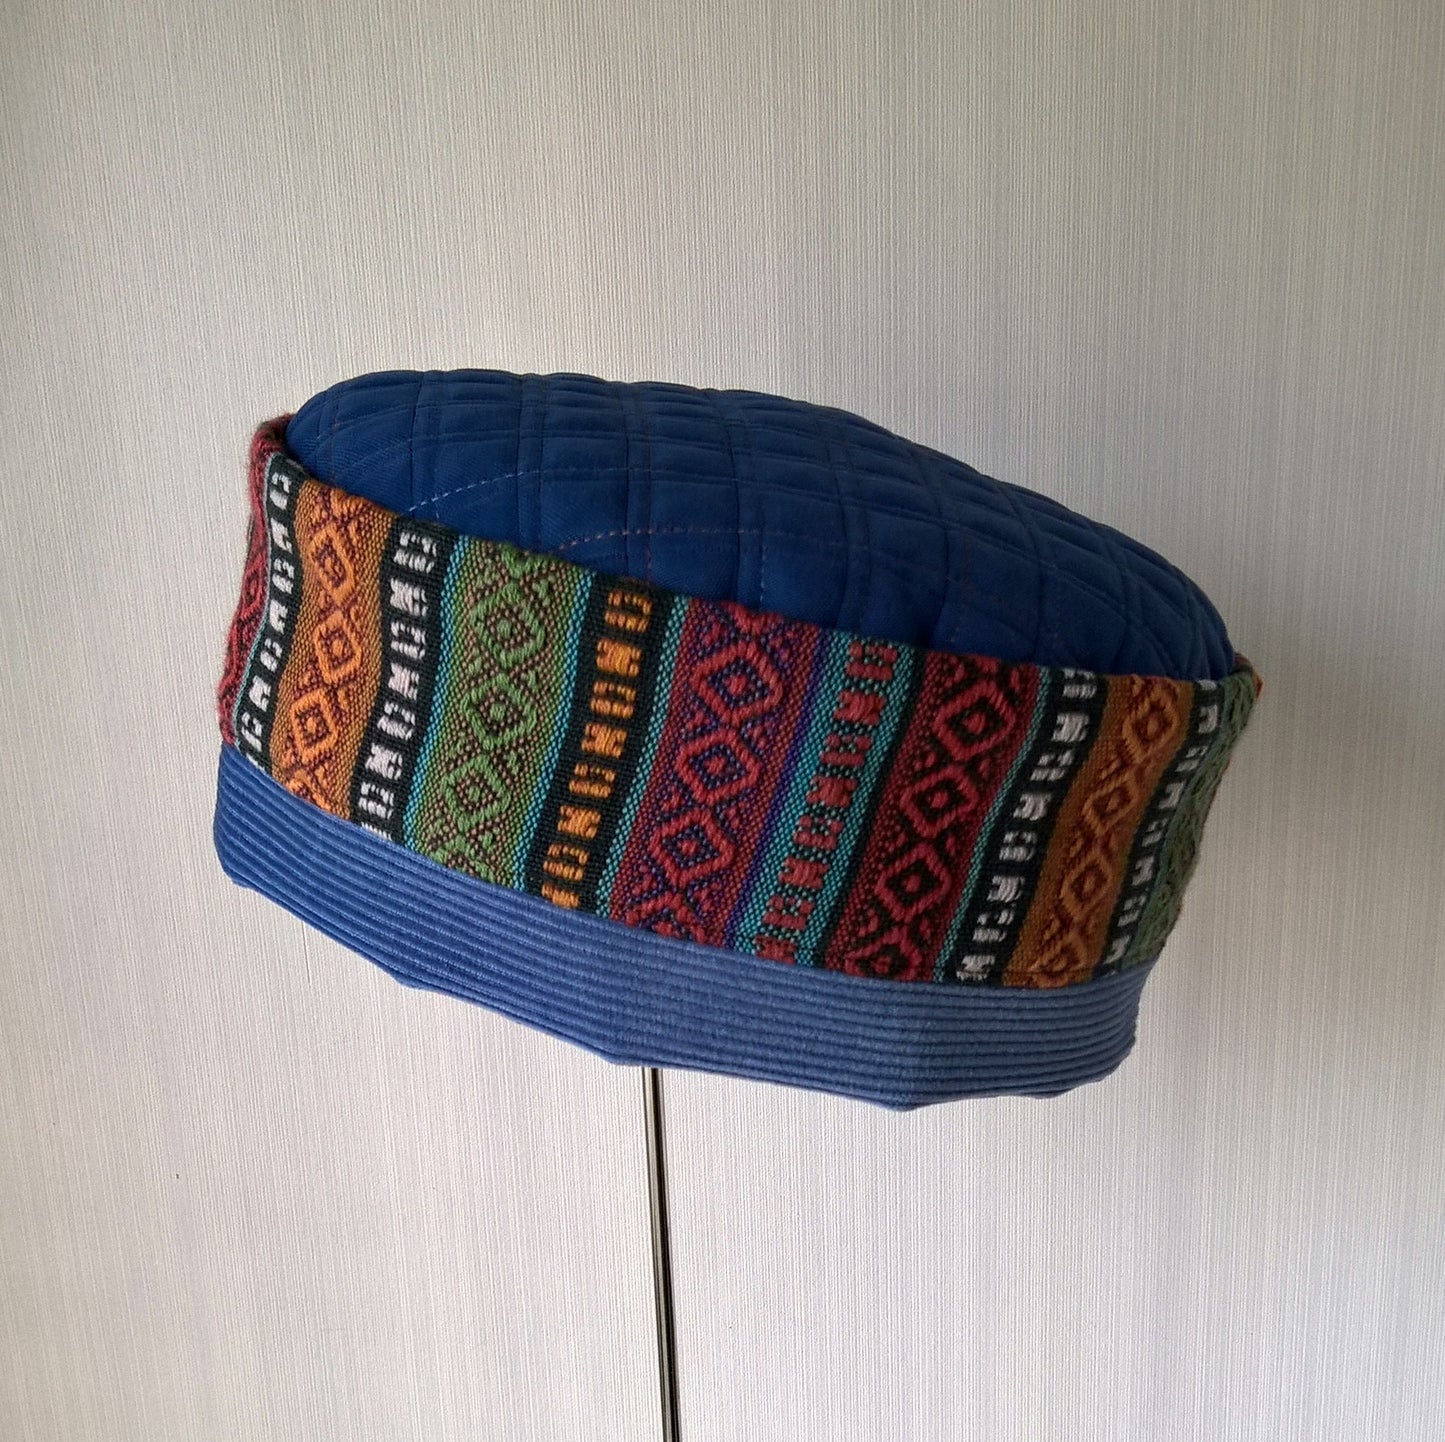 Pillbox shaped ethnic striped hat